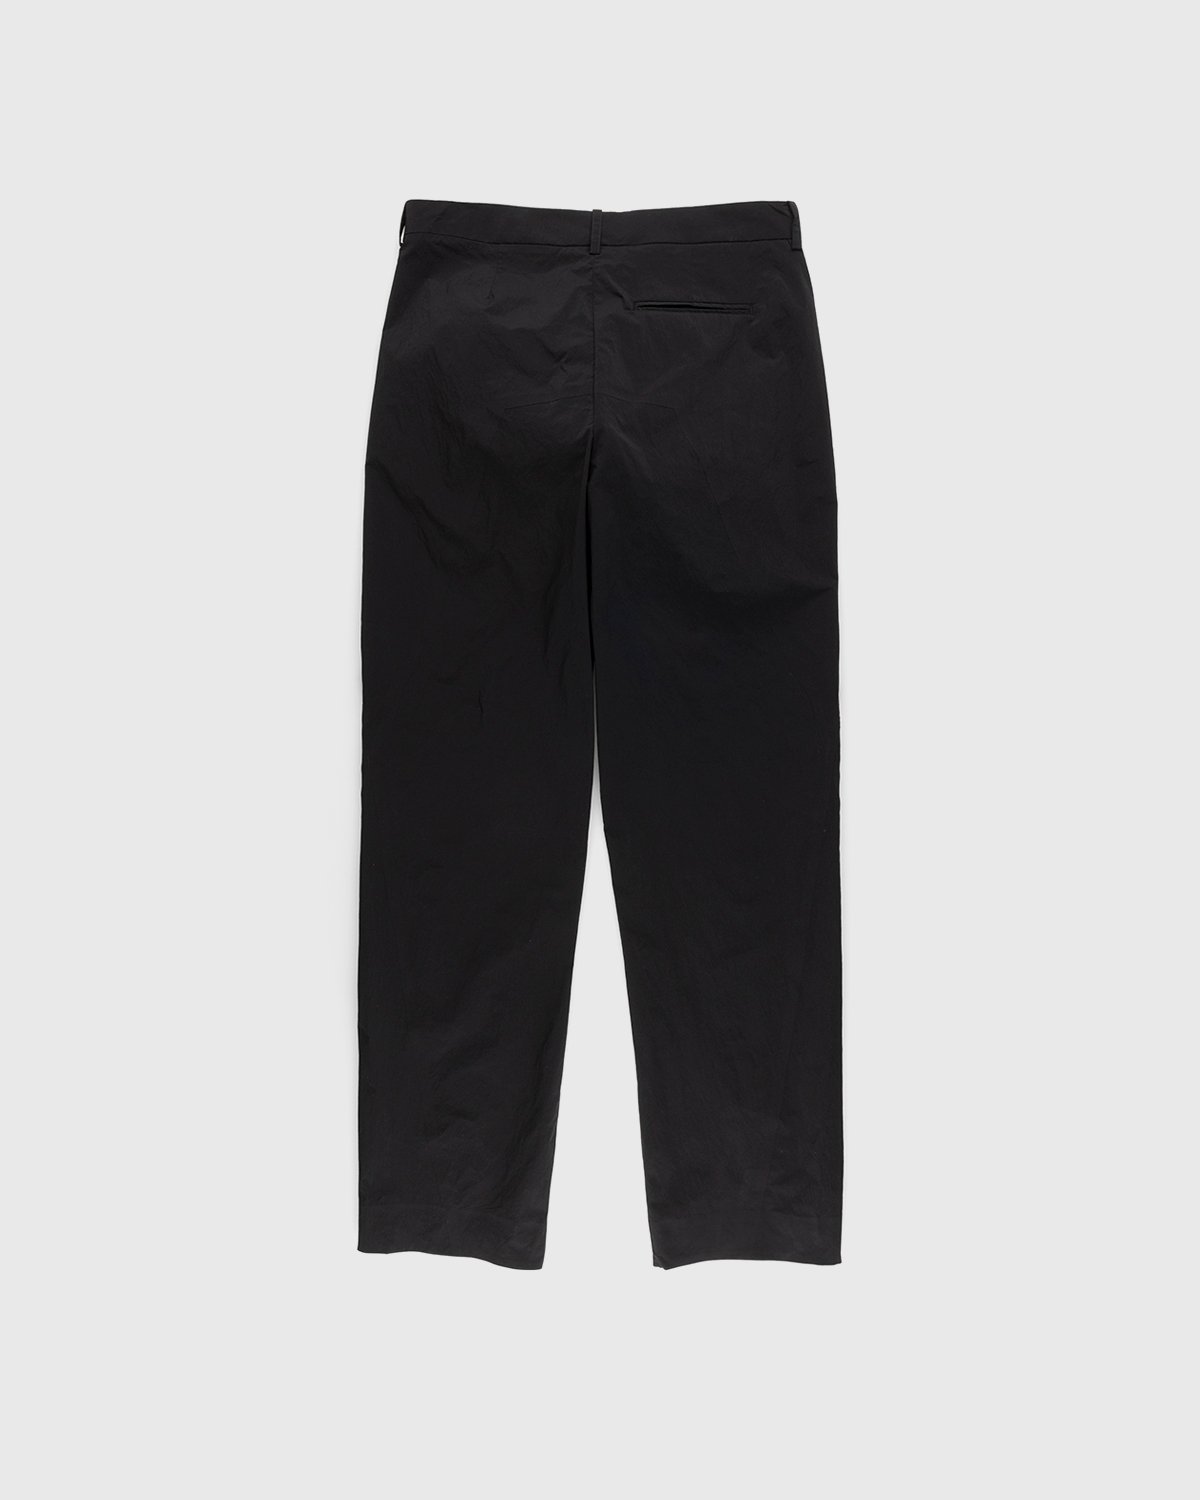 A-Cold-Wall* - Stealth Nylon Pant Black - Clothing - Black - Image 2